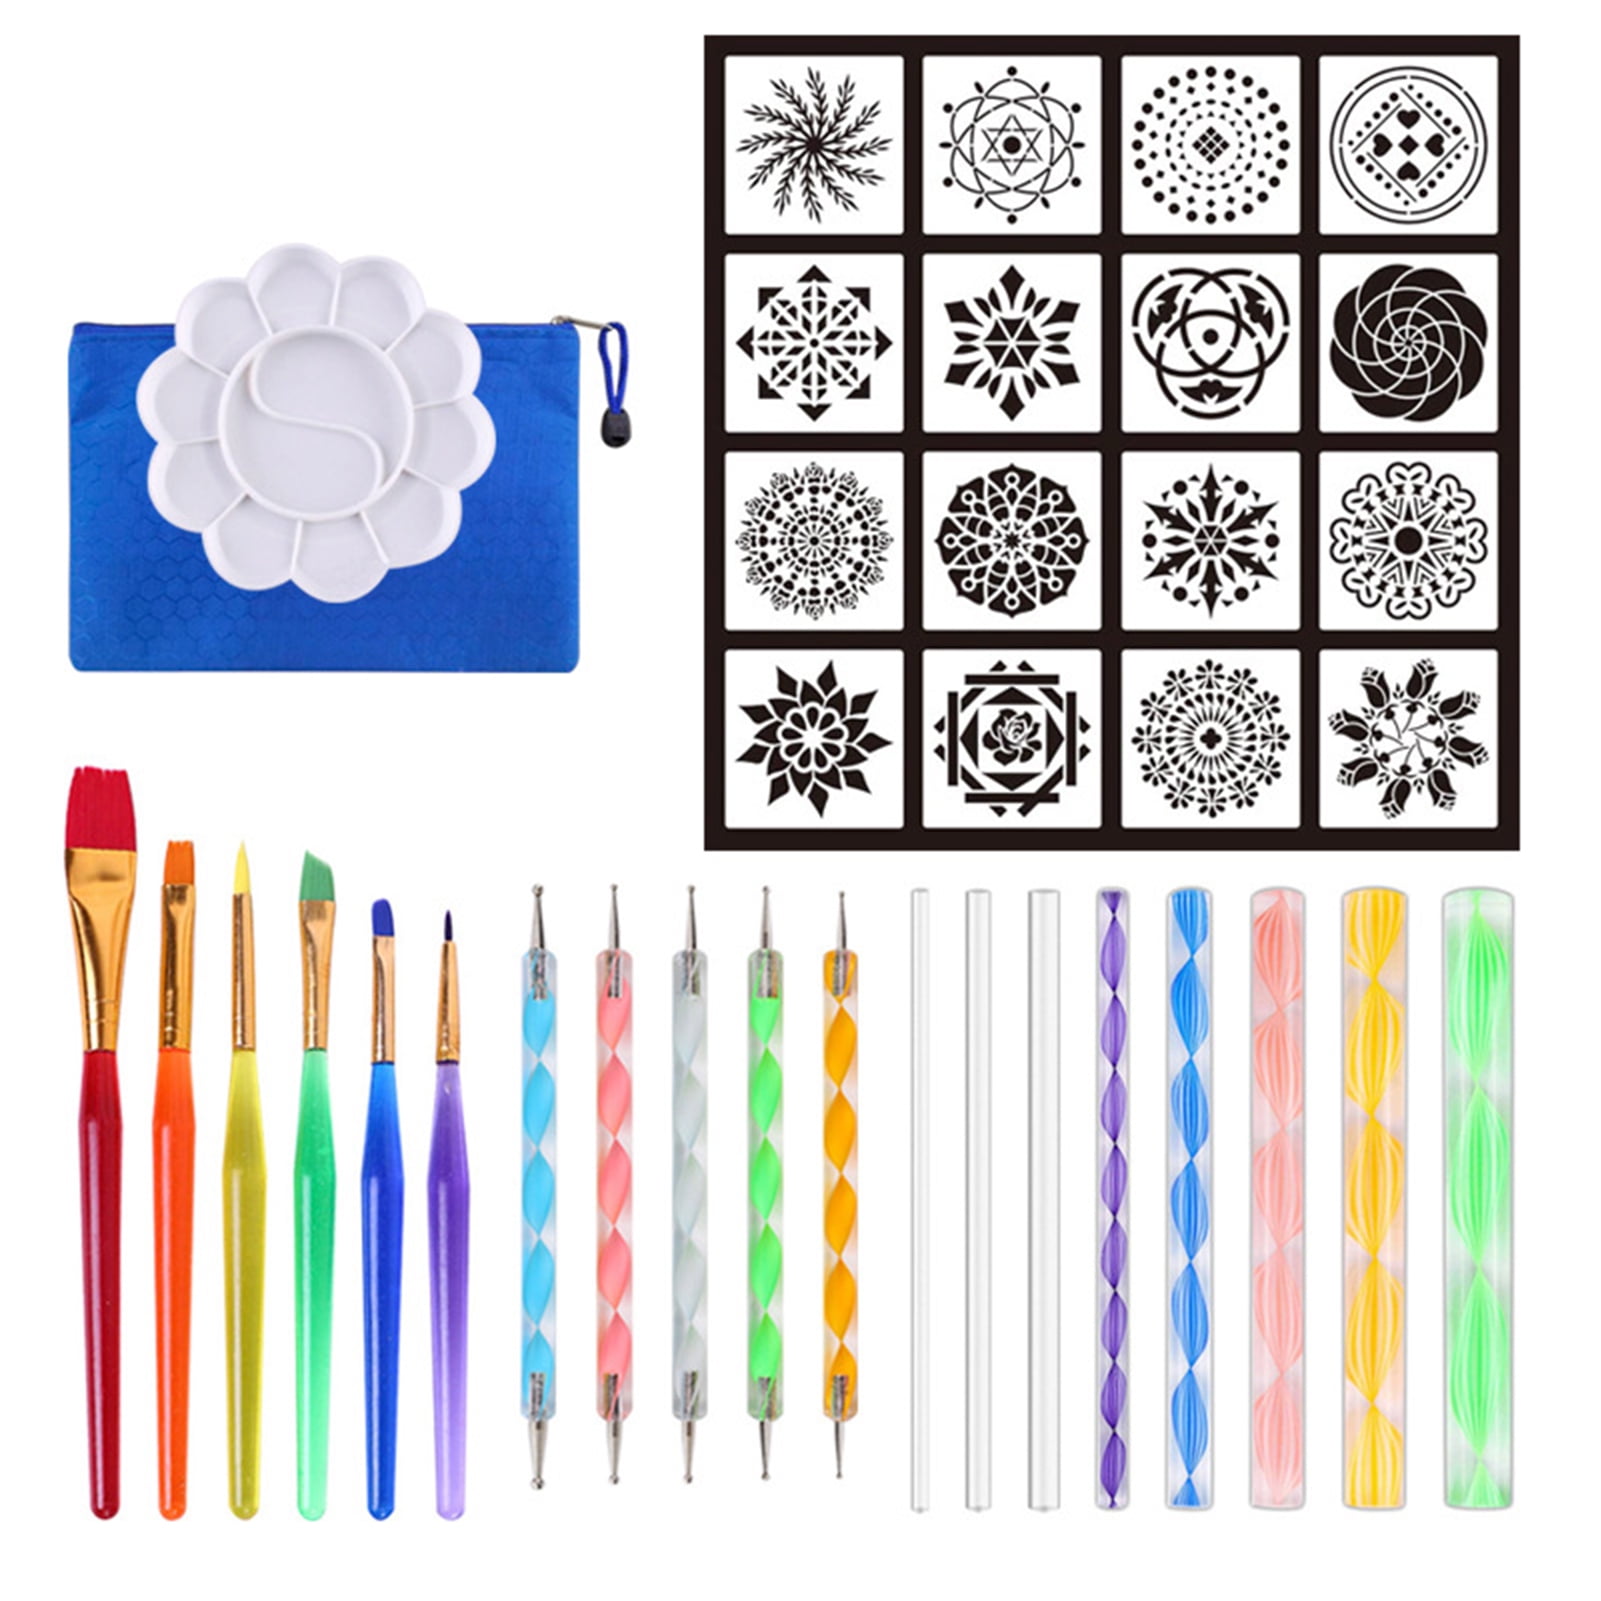 33 Pieces Mandala Dotting Tools Set Stencil Pen Dotting Tools for Painting Rock Mandala Dot Art Painting Drawing Tools Kit with Storage Bag 